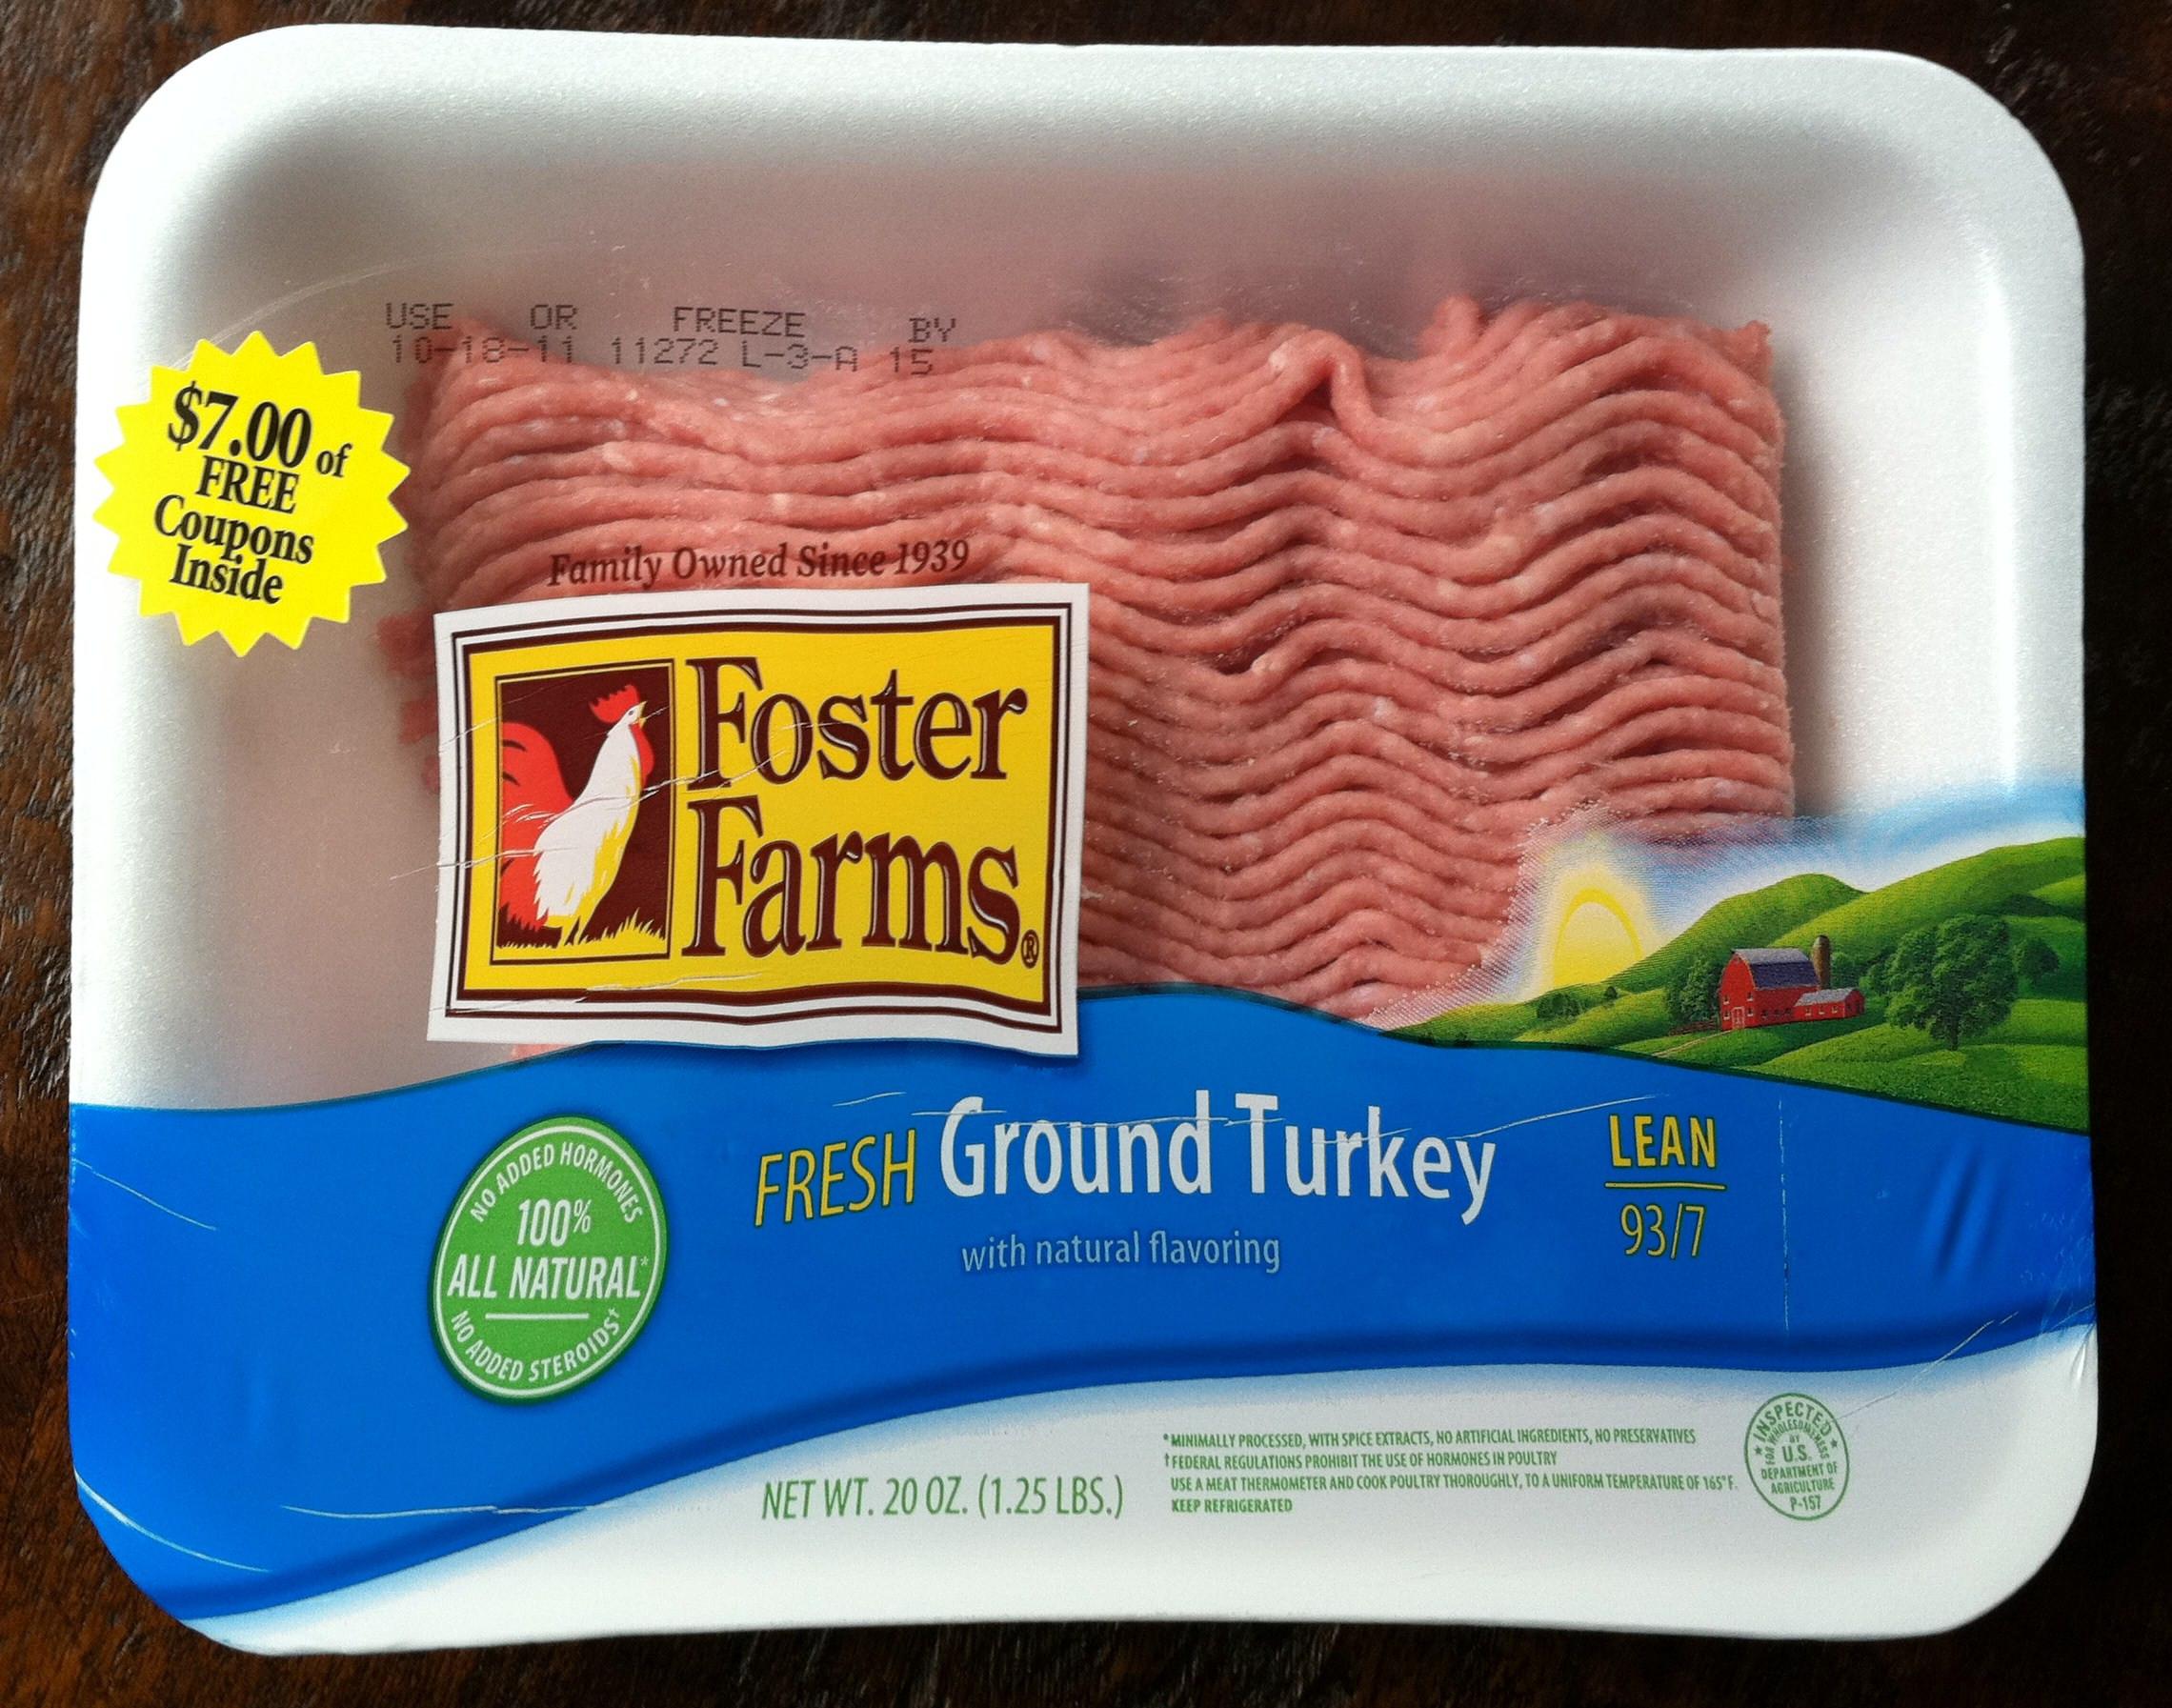 Ground Turkey Coupons
 $1 1 Foster Farms Ground Turkey Coupon